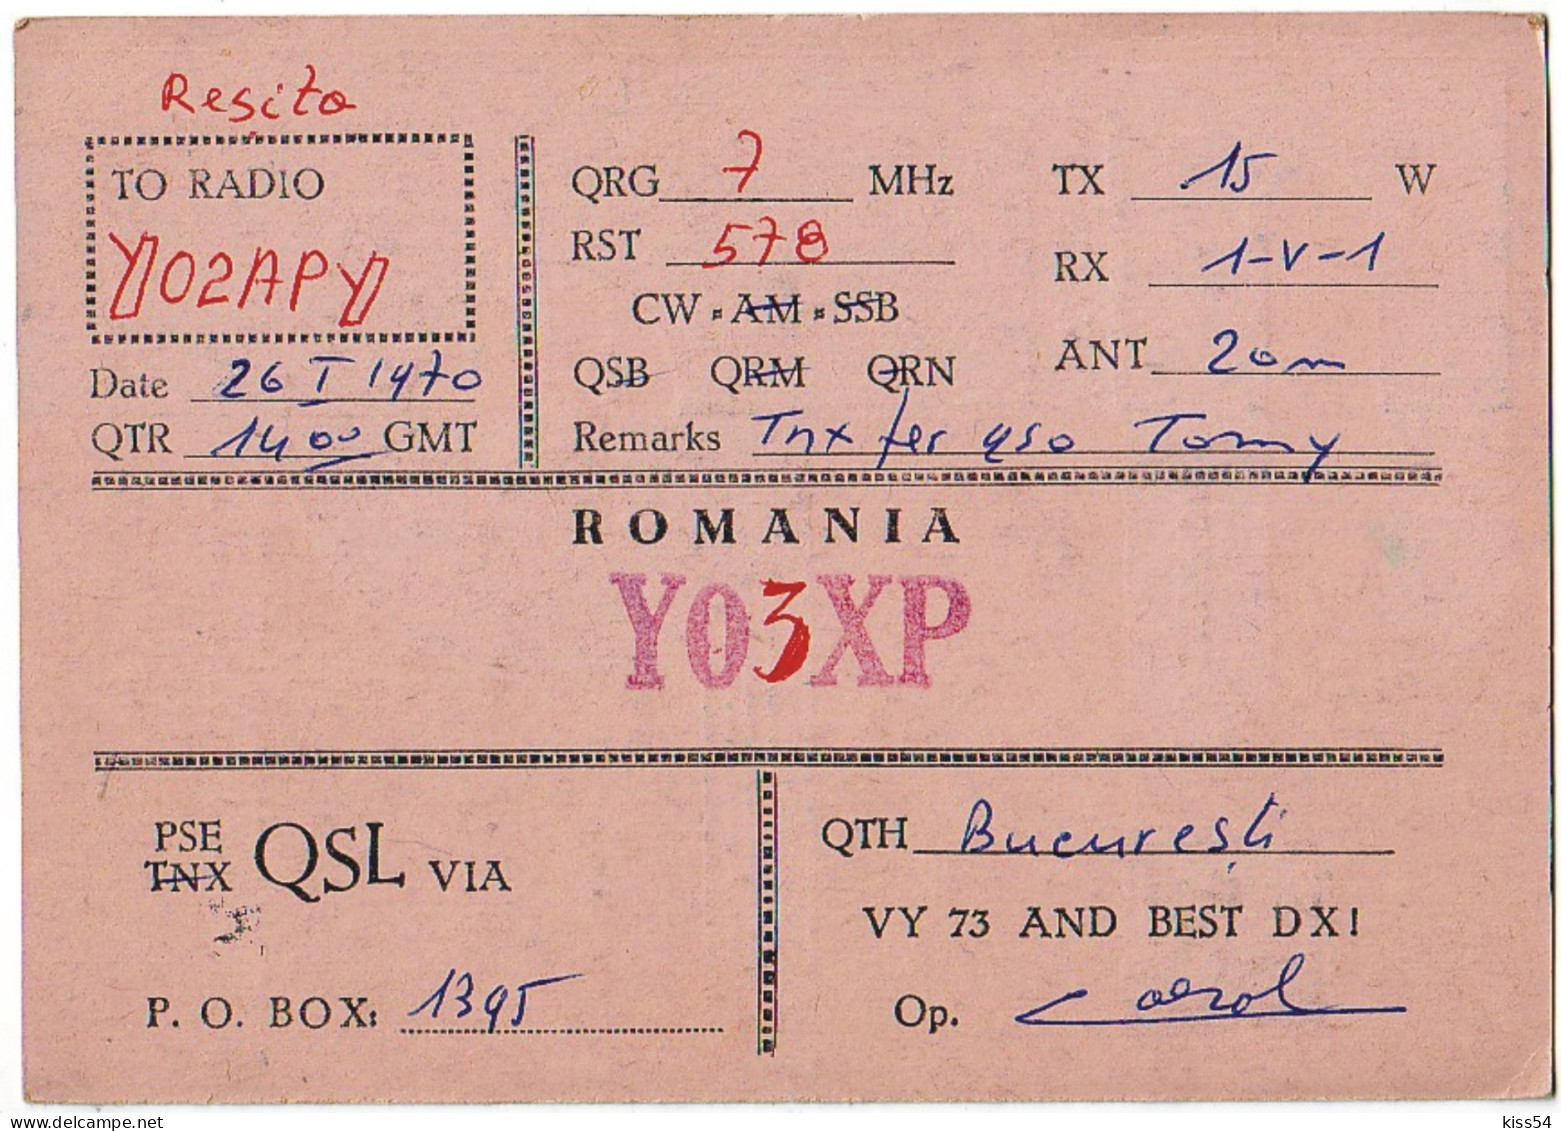 Q 40 - 301-a ROMANIA - 1970 - Radio Amateur